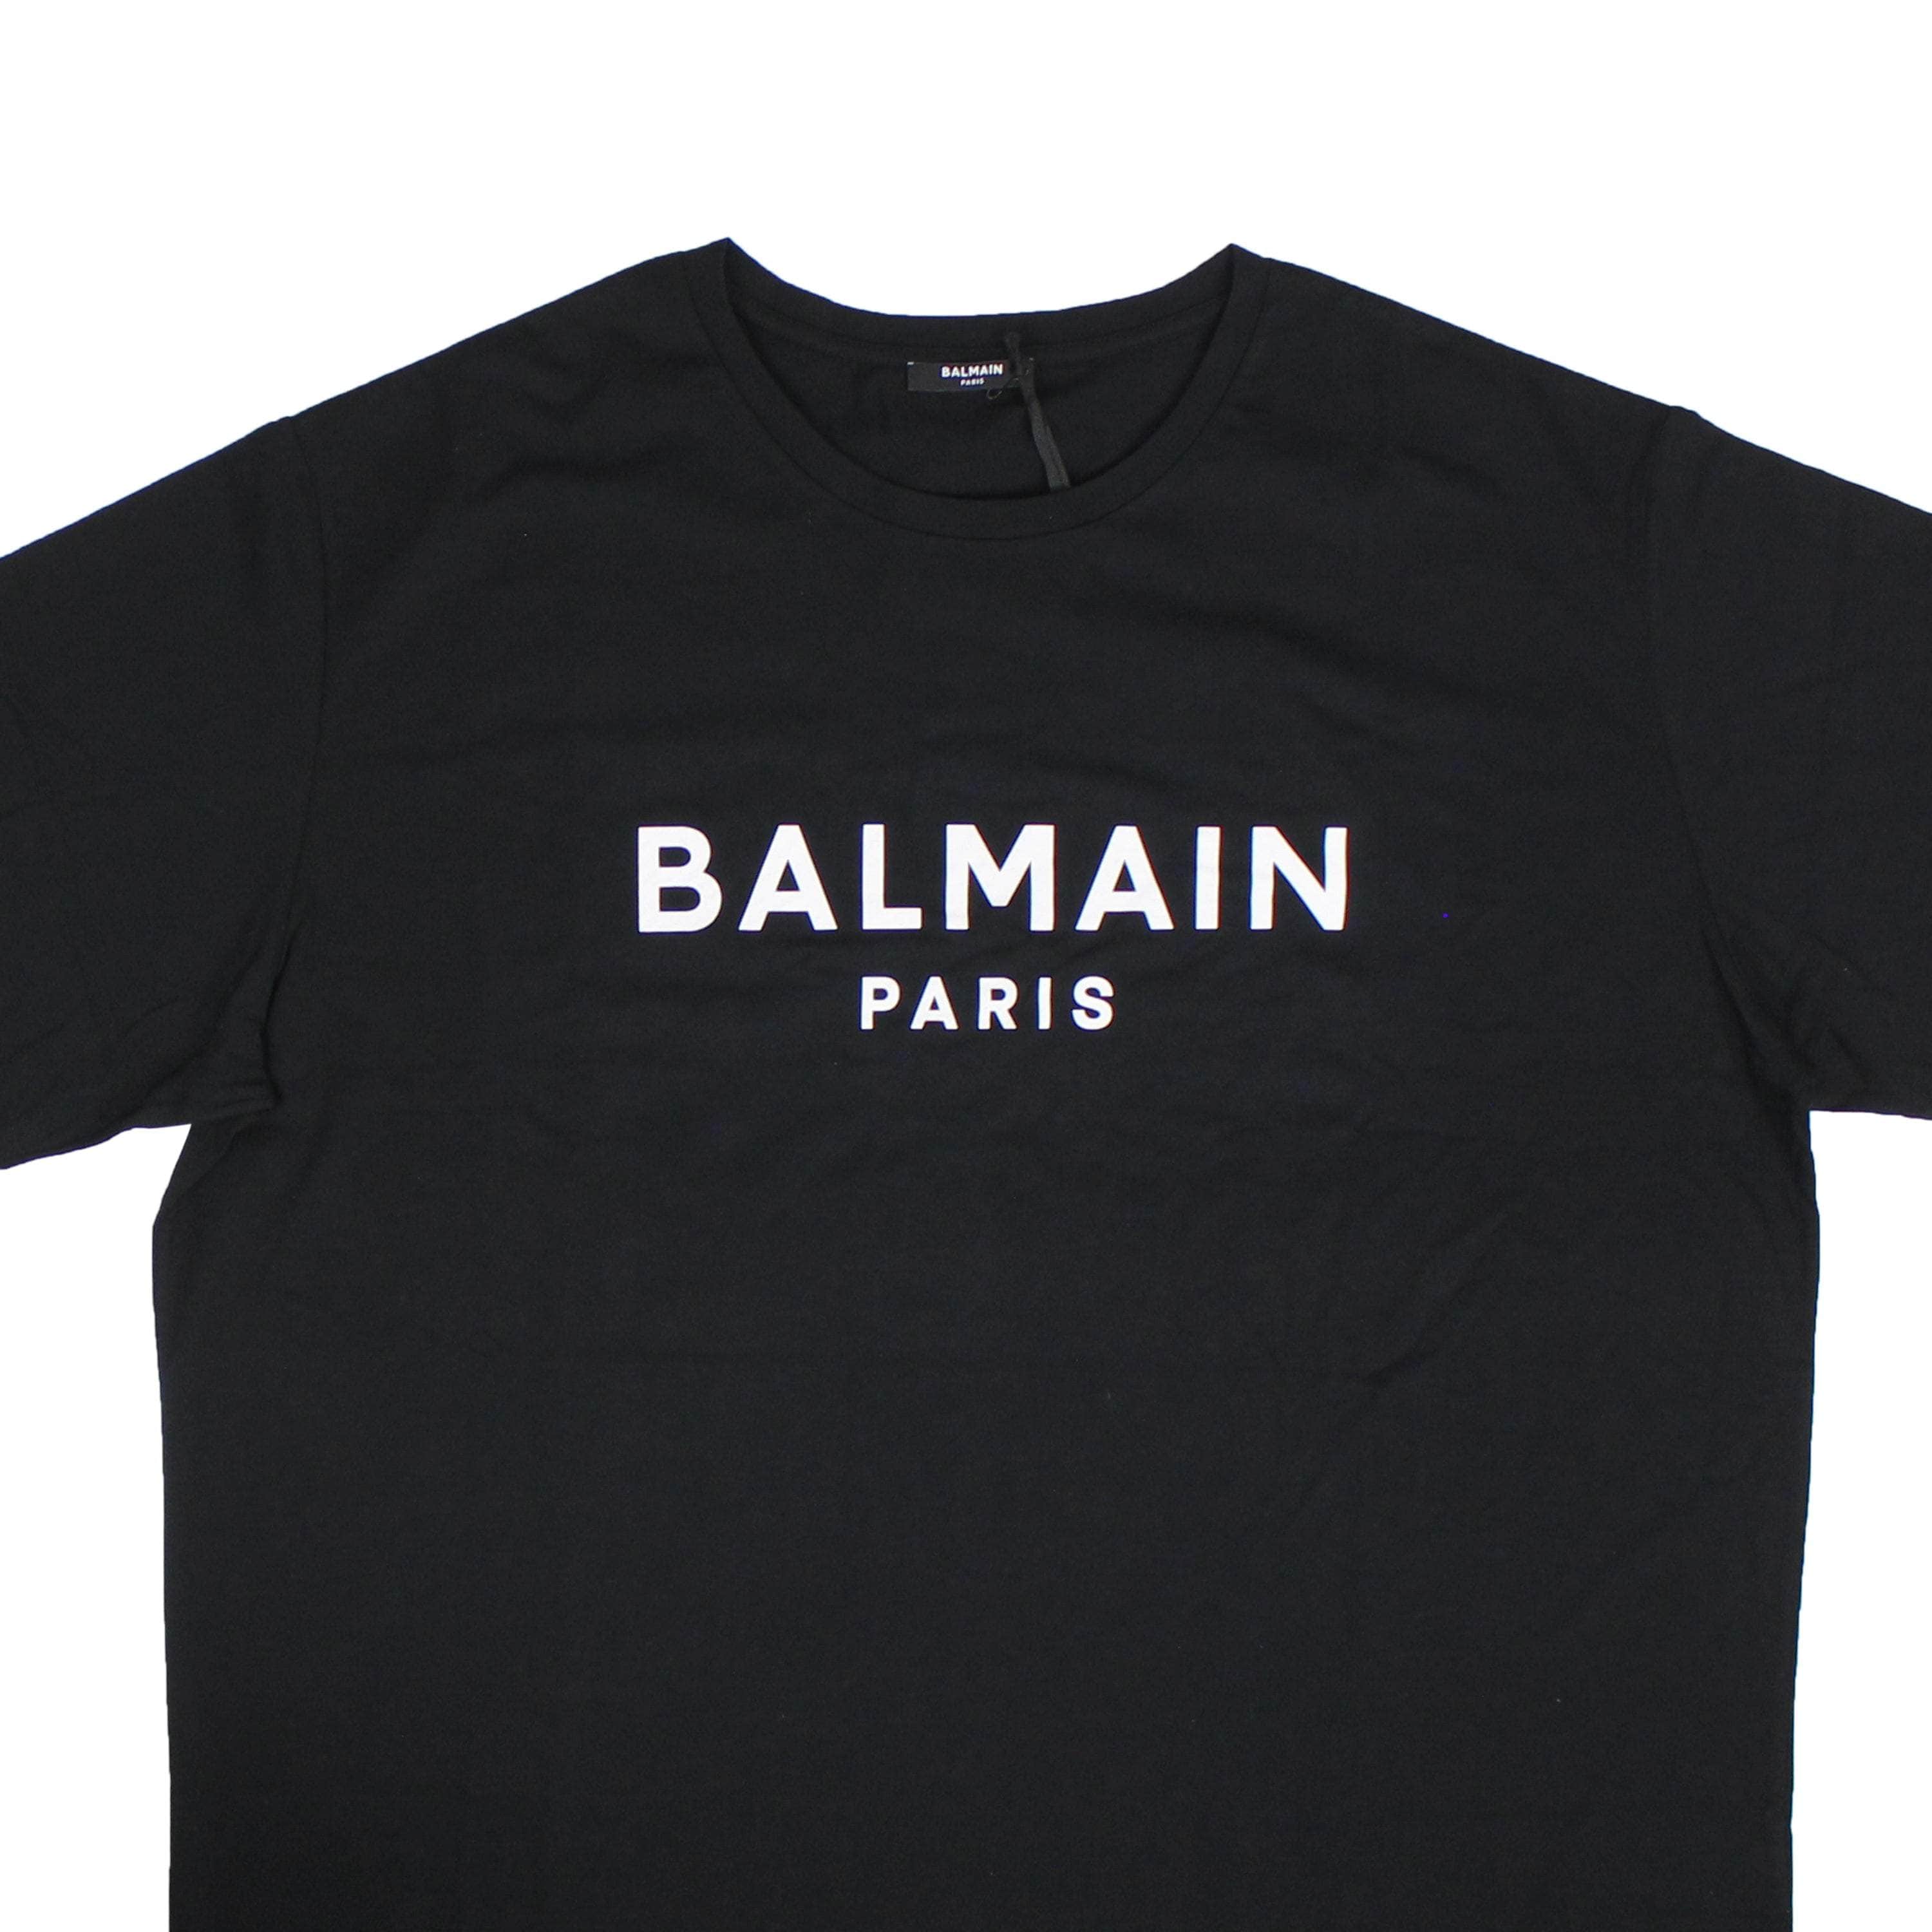 Balmain 250-500, channelenable-all, chicmi, couponcollection, main-clothing, shop375, Stadium Goods, stadiumgoods XXXL Black Logo T-Shirt BLM-XTSH-0007/XXXL BLM-XTSH-0007/XXXL